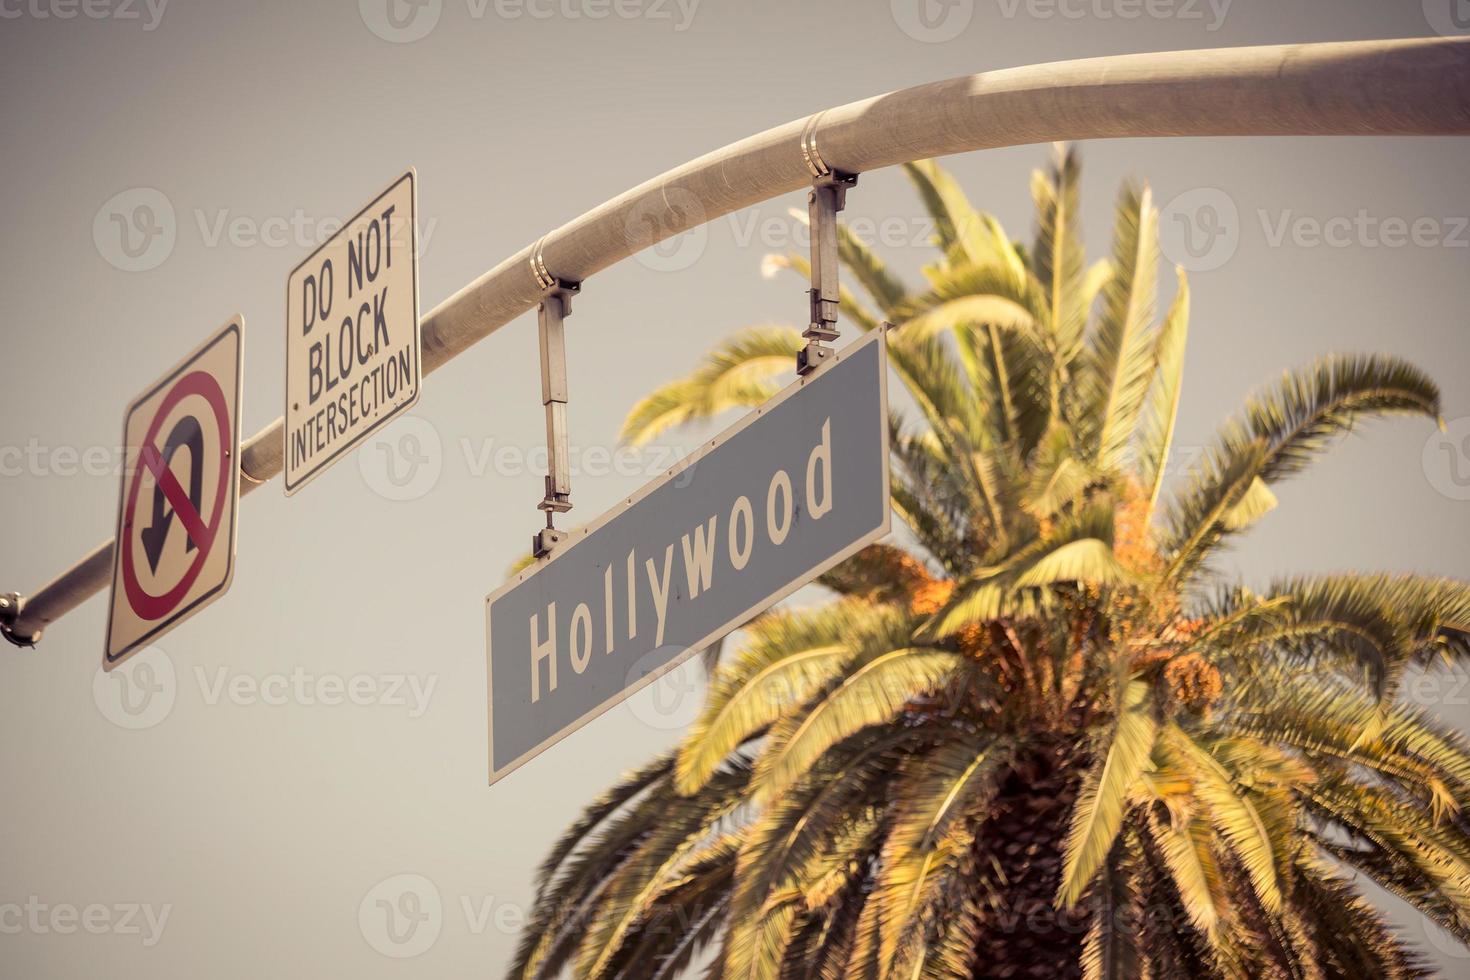 hollywood tecken i los angeles, kalifornien foto